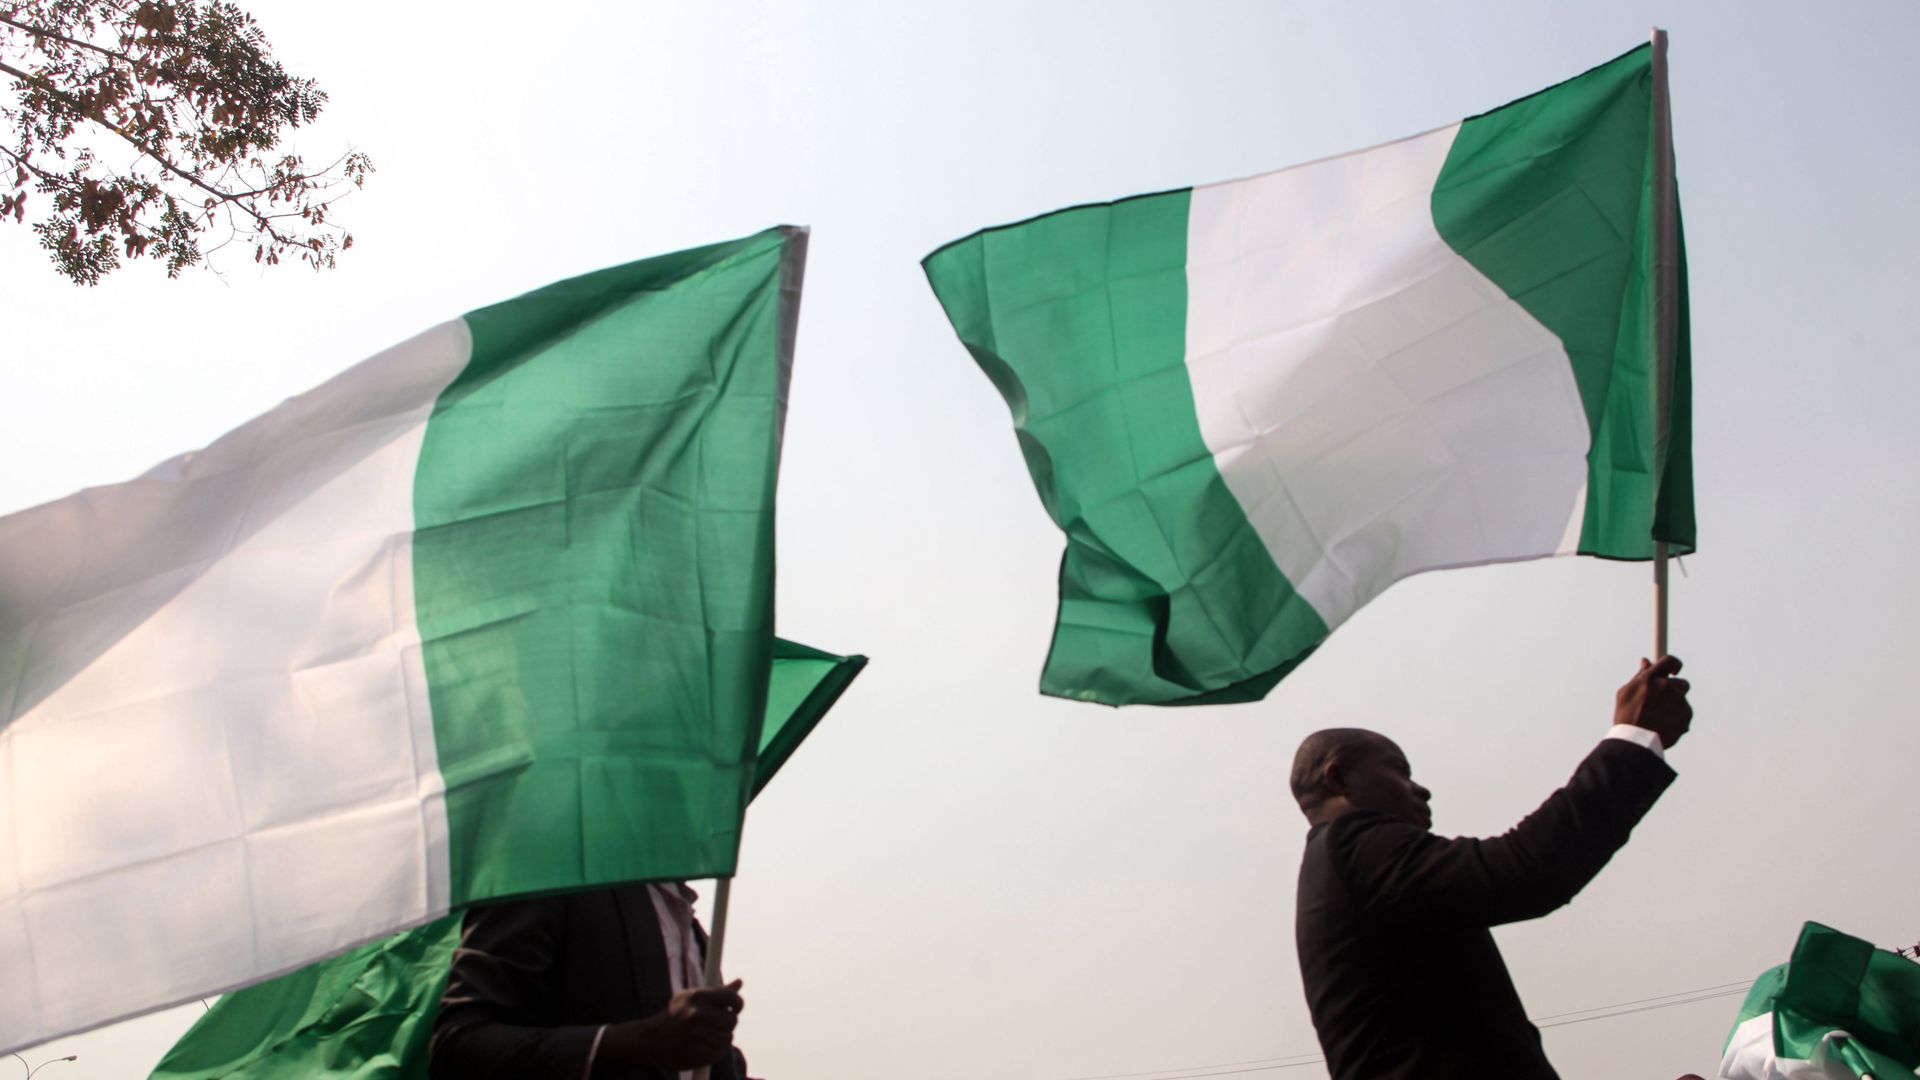 The nigerian flag.